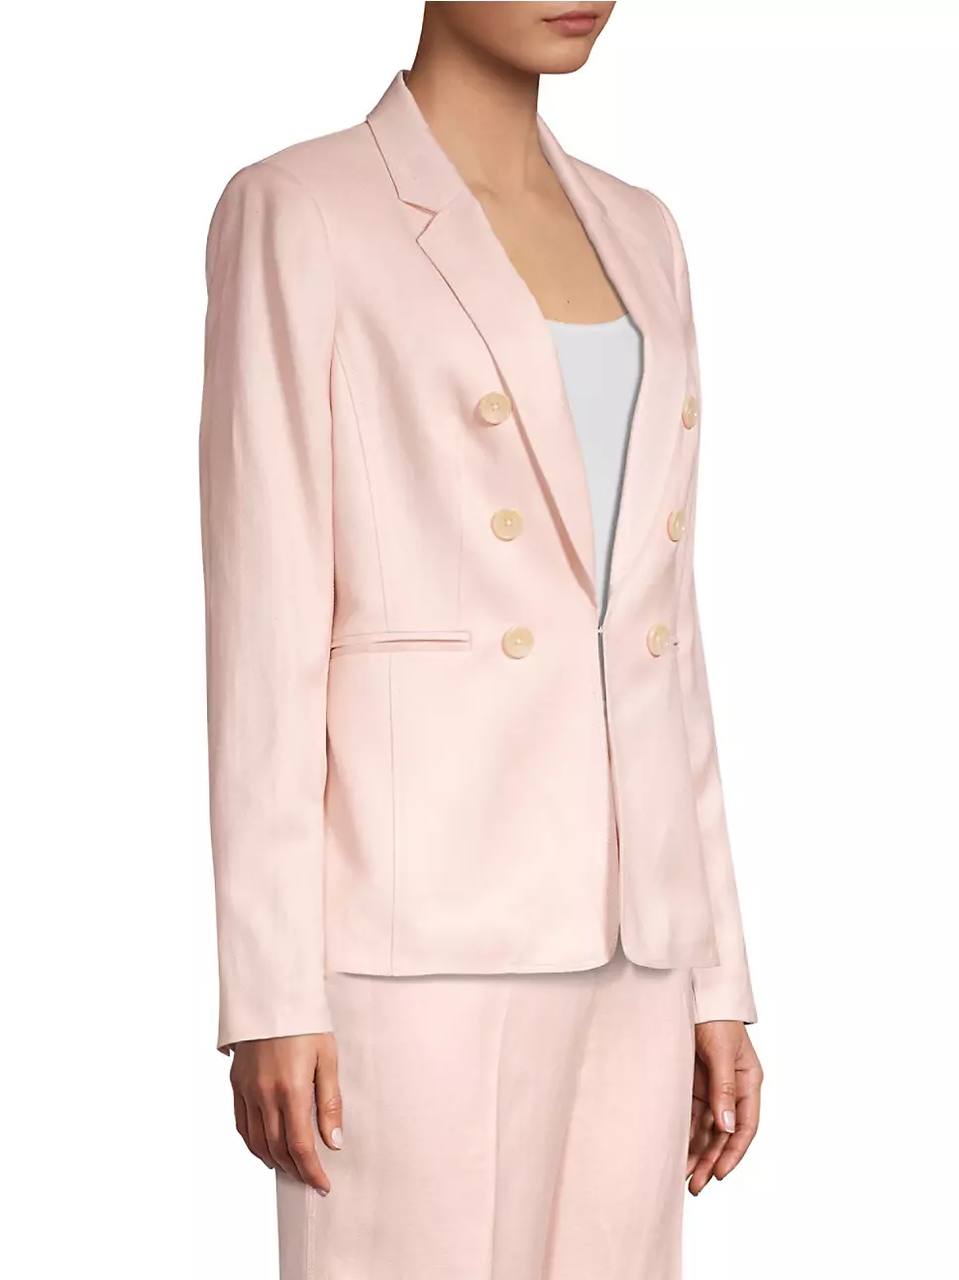 Donna Karan jacket